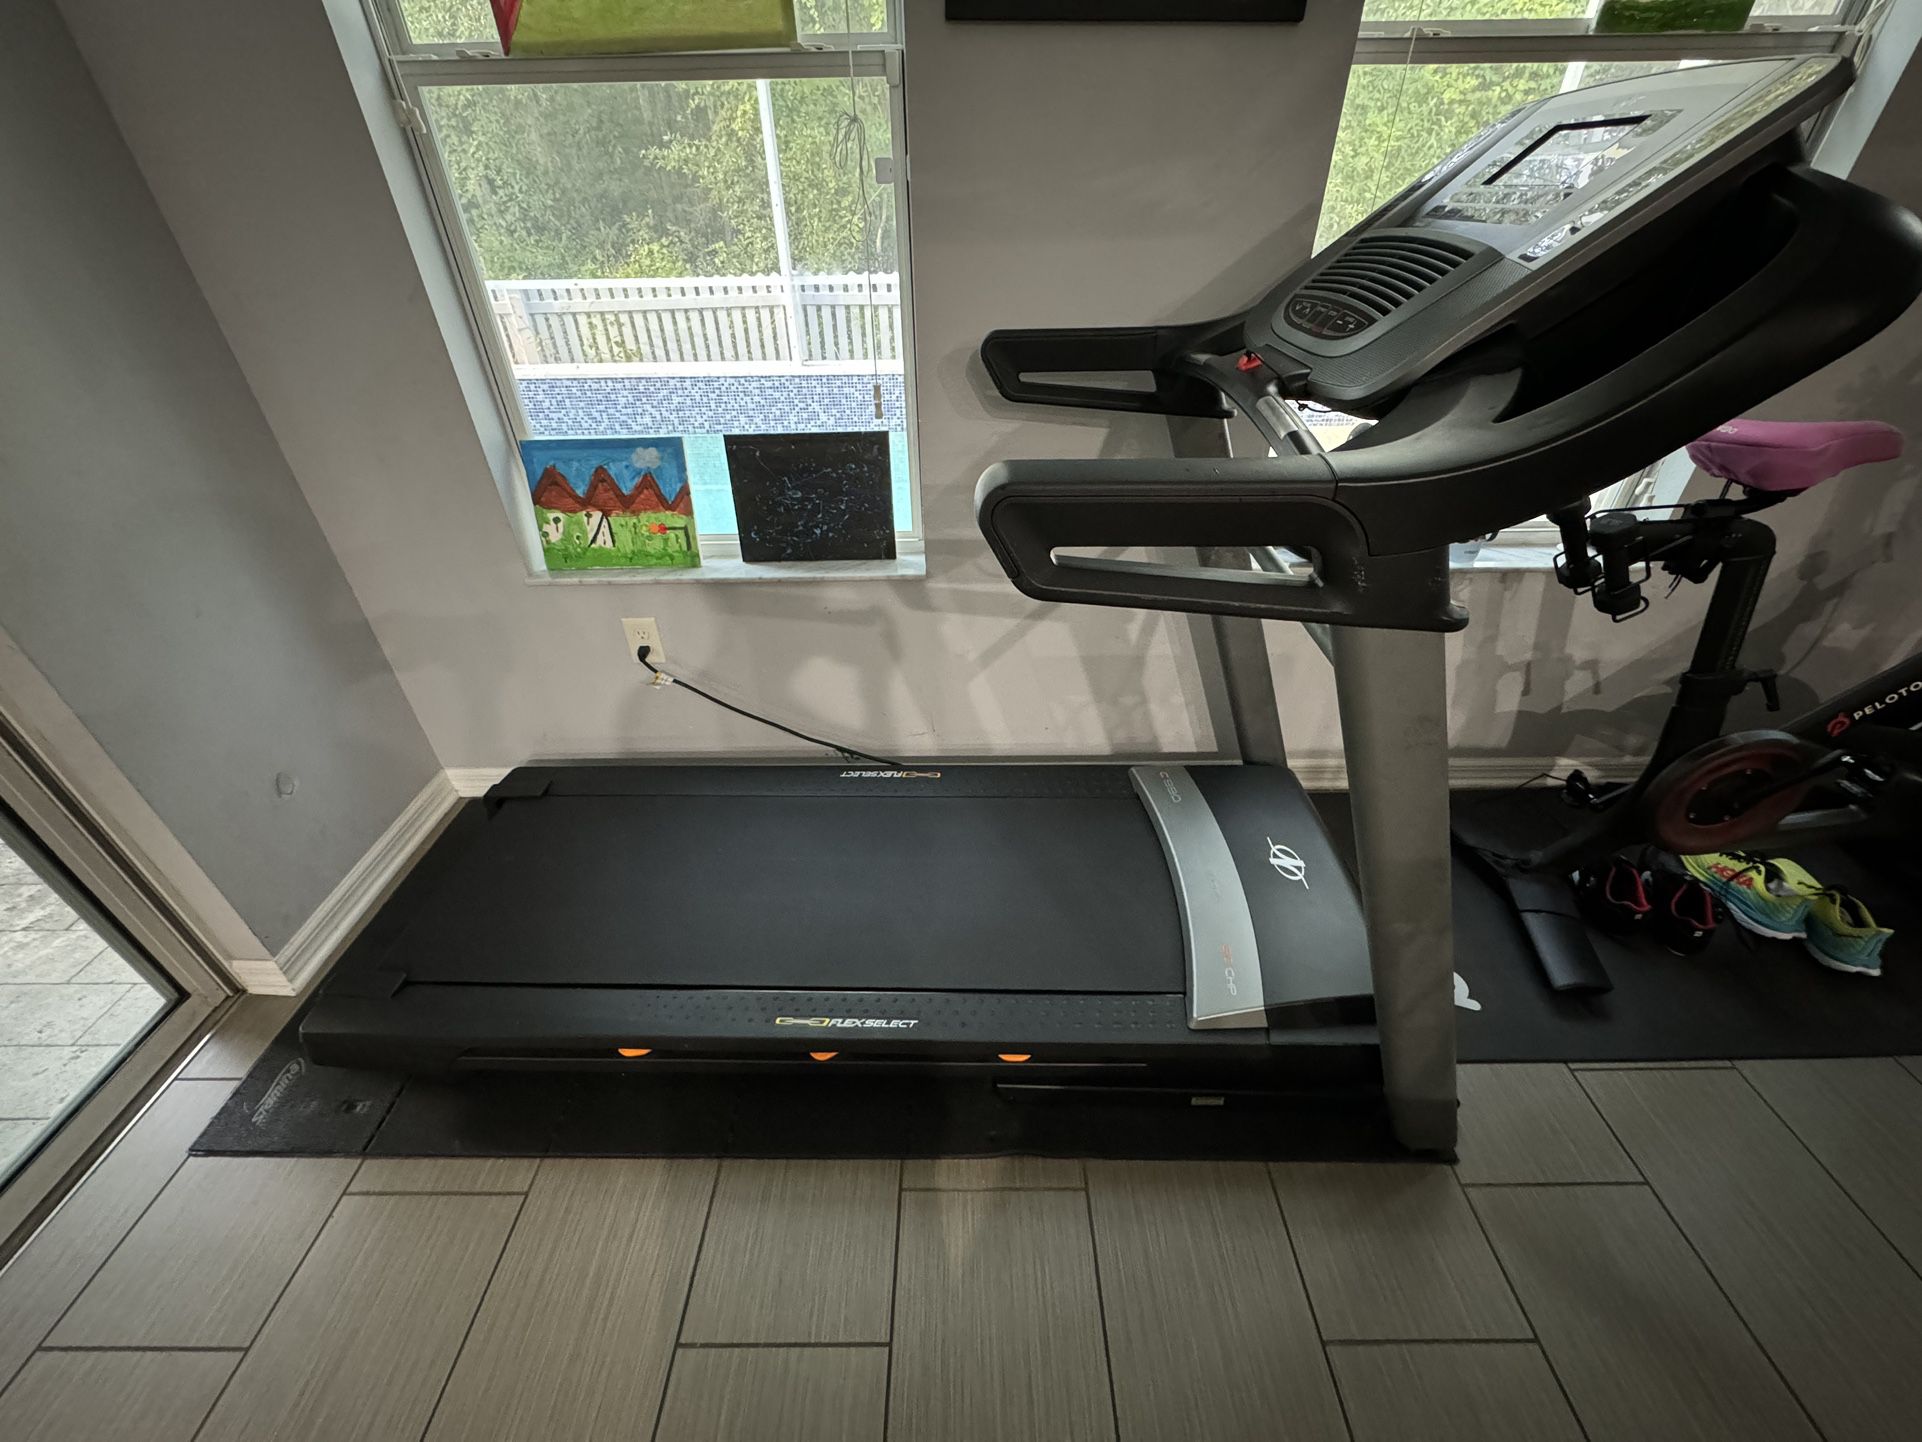 NordicTrack C 990 Treadmill